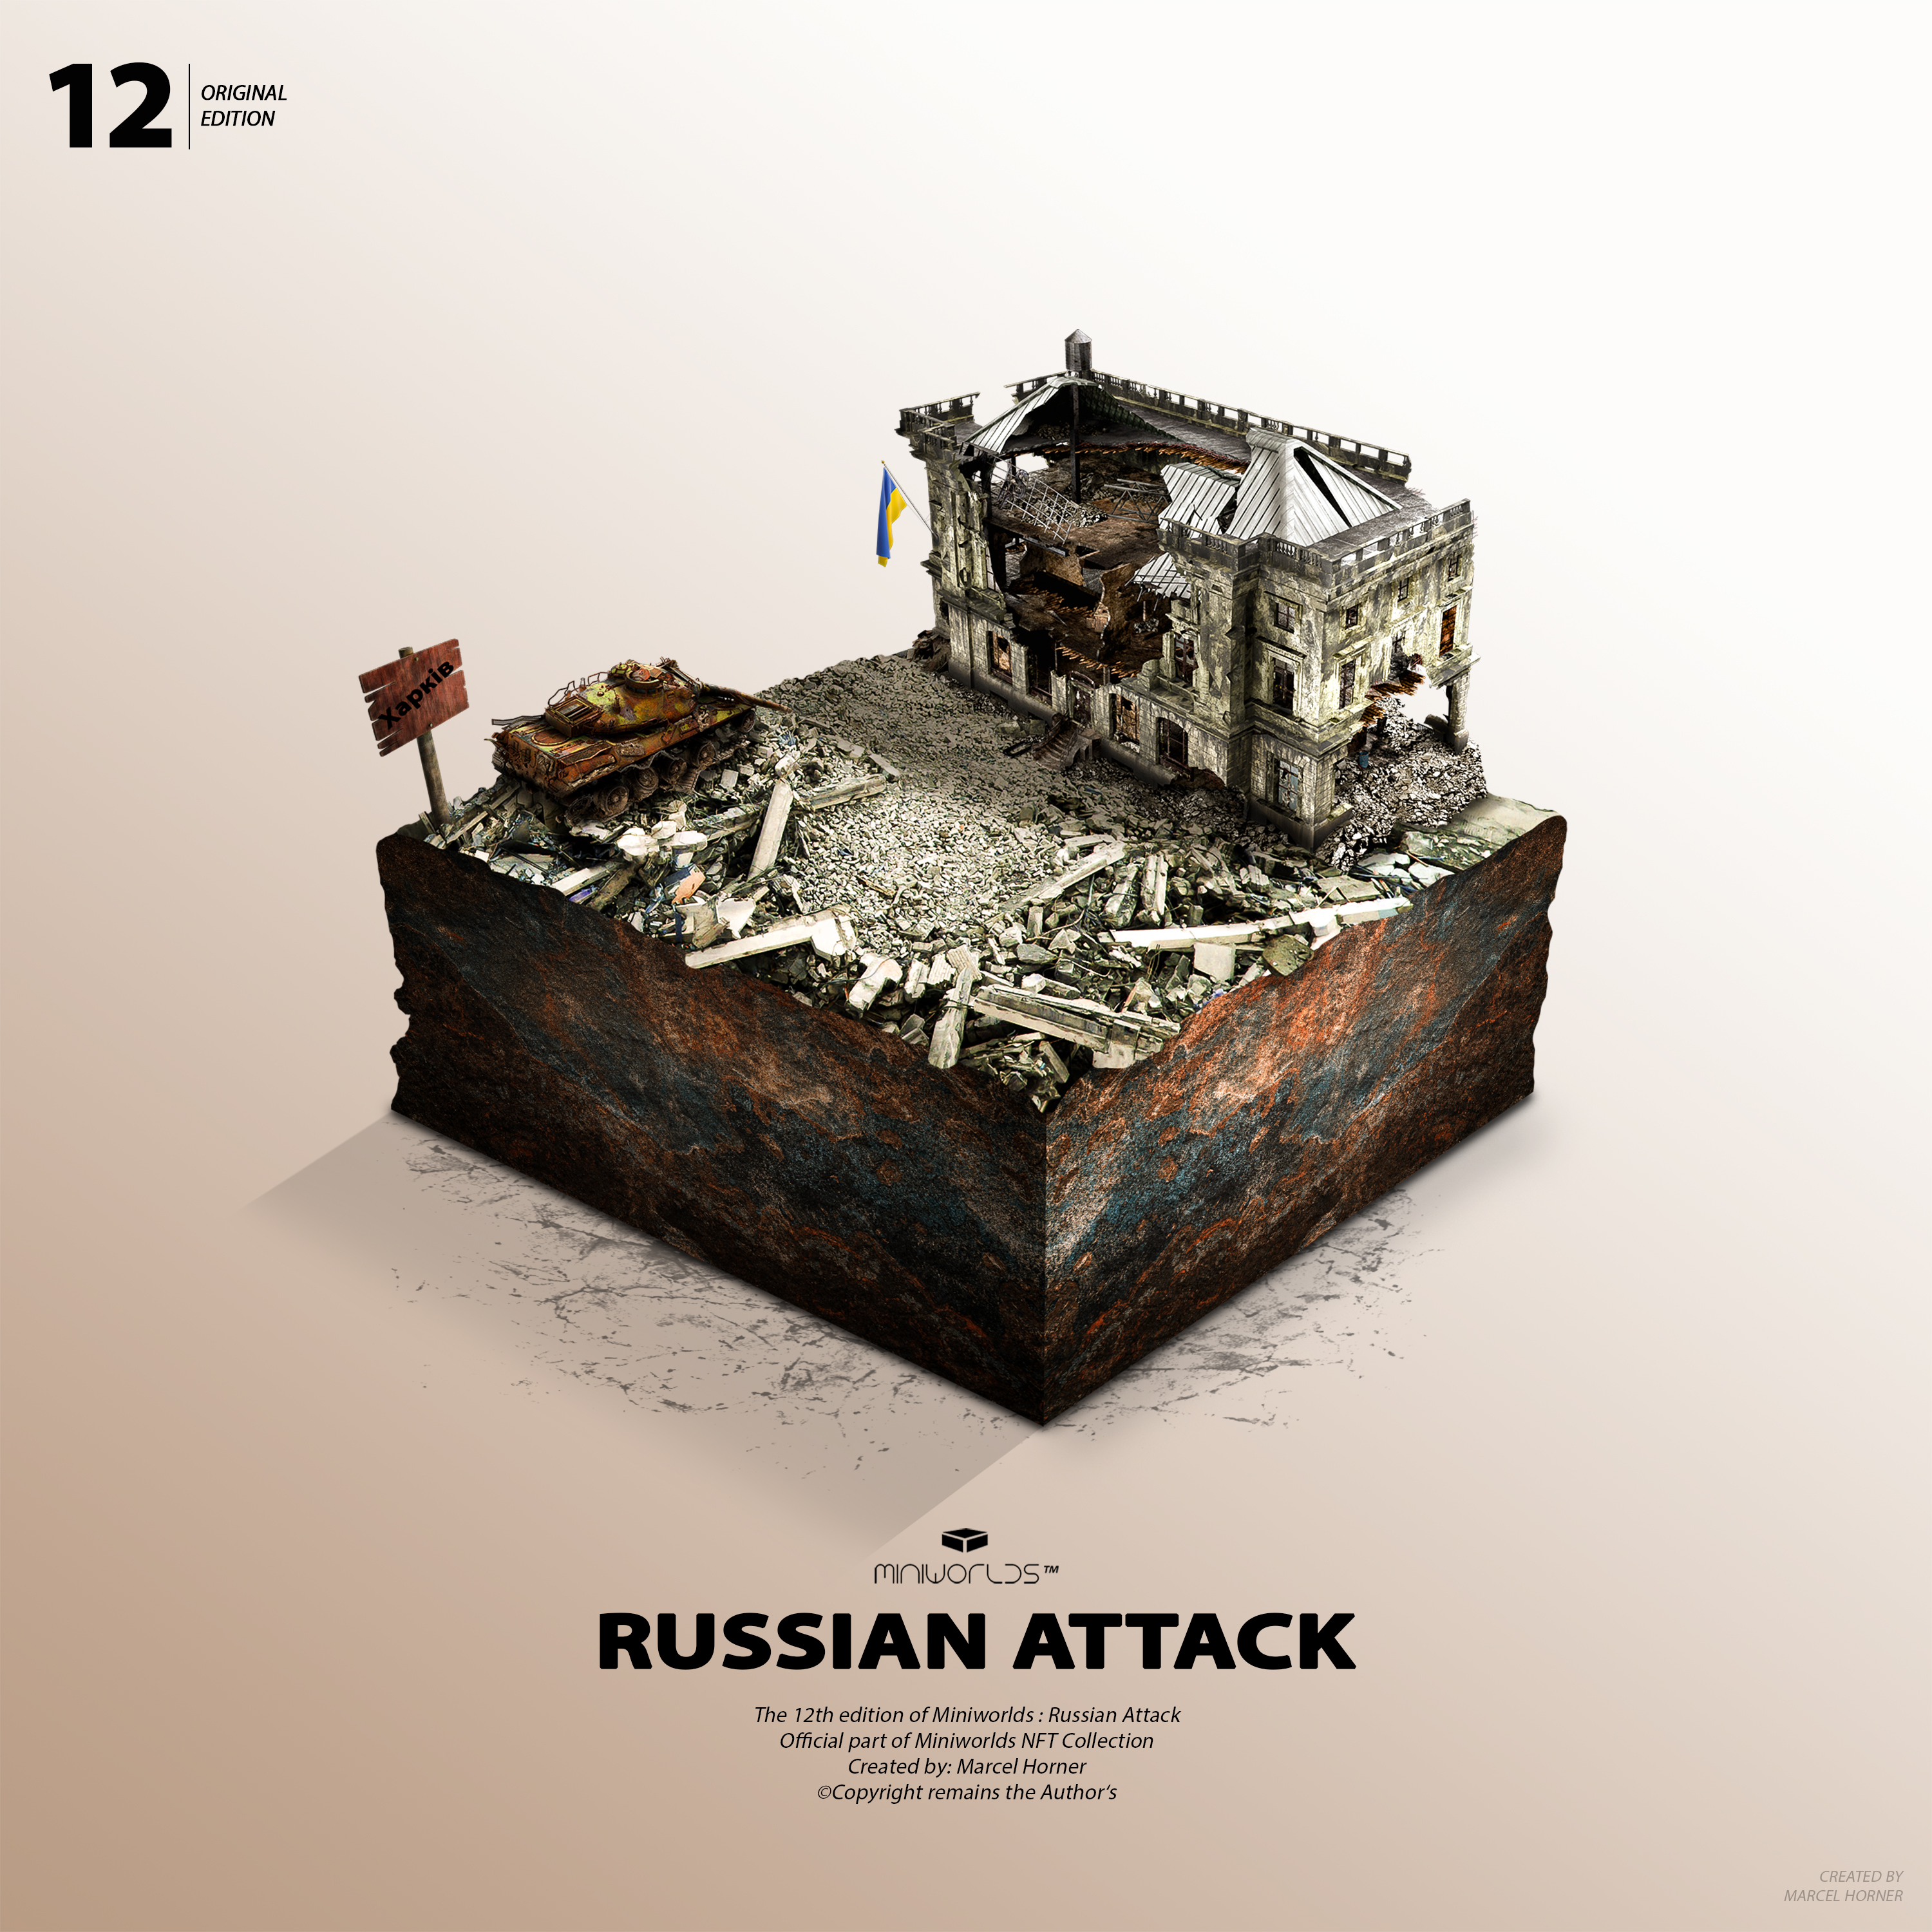 Miniworlds: Russian Attack #12